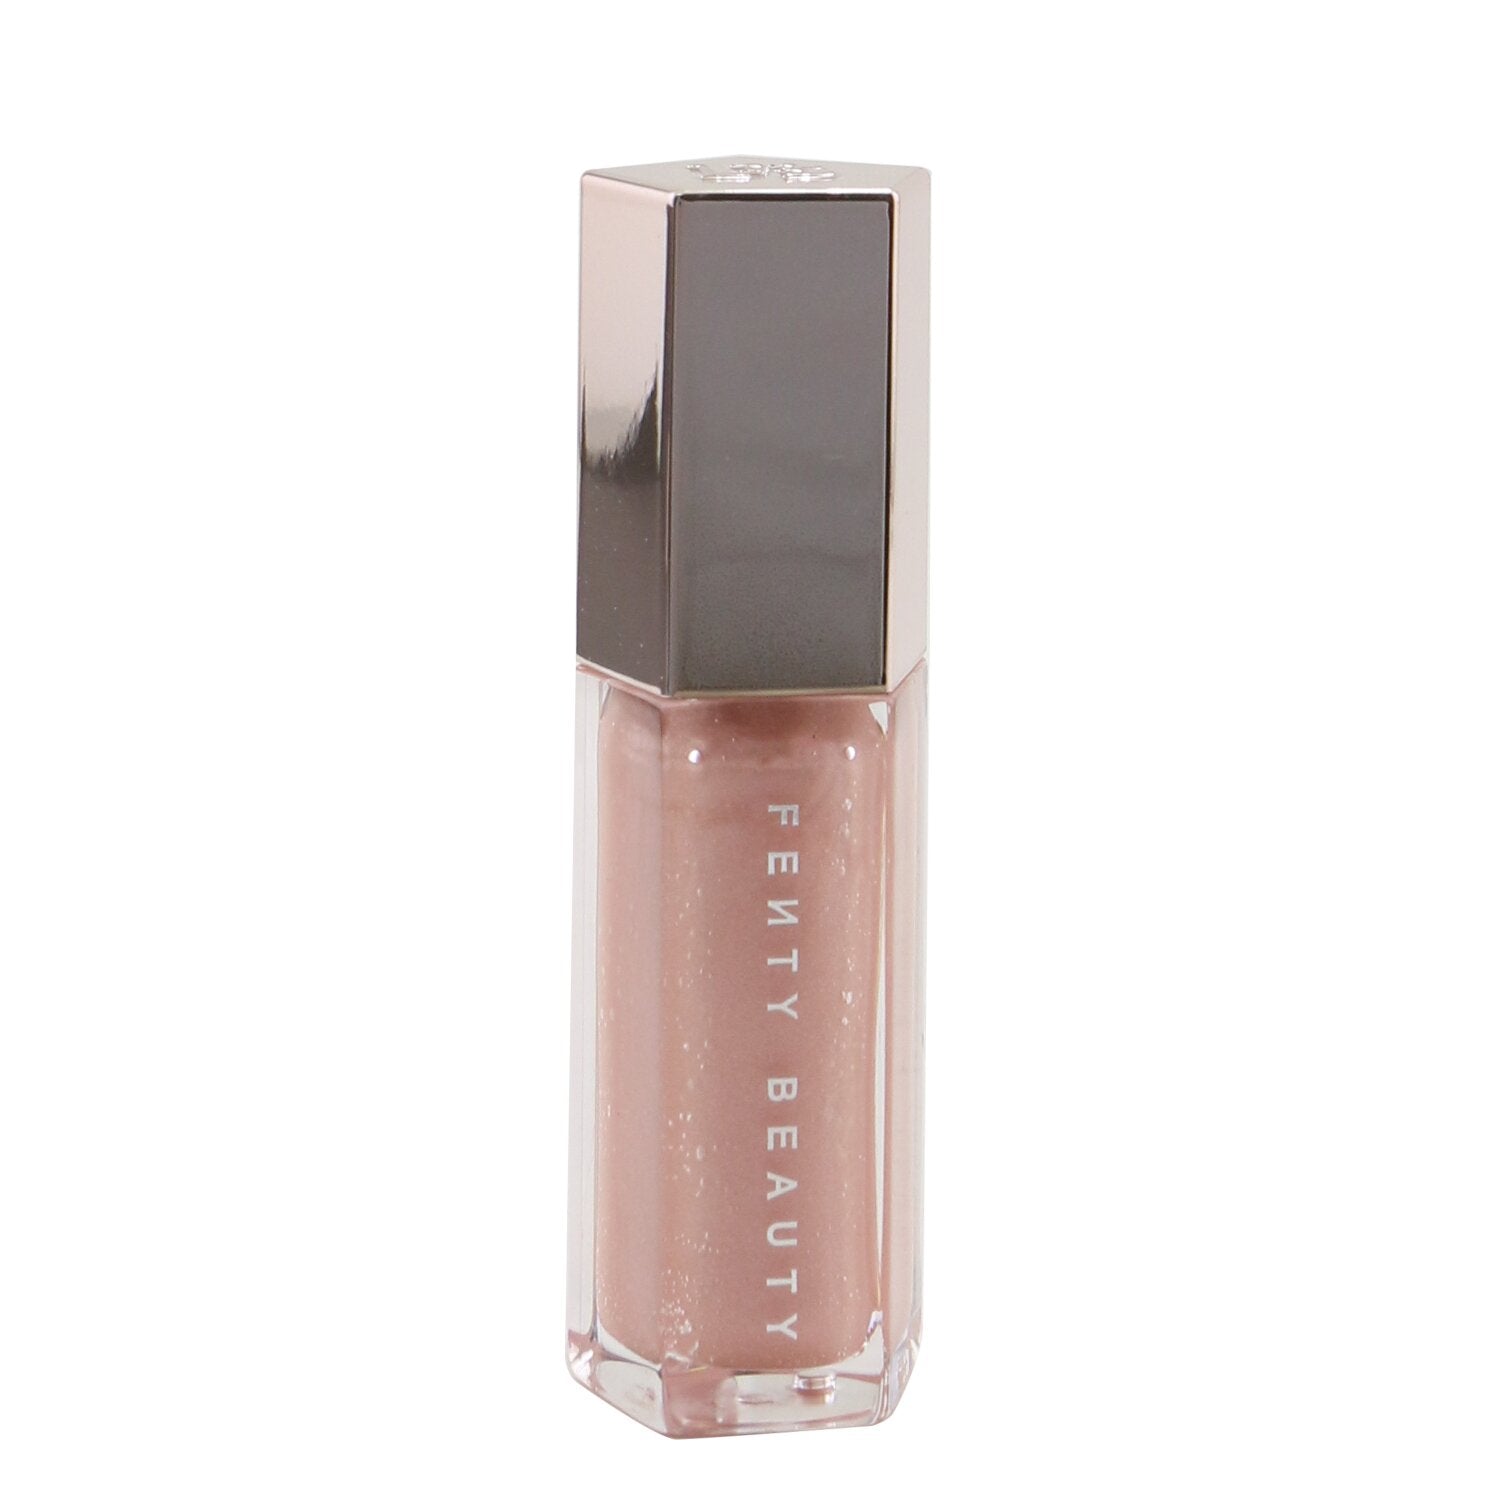 Fenty Beauty by Rihanna Gloss Bomb Universal Lip Luminizer - # Fenty Glow  (Shimmering Rose Nude) 9ml